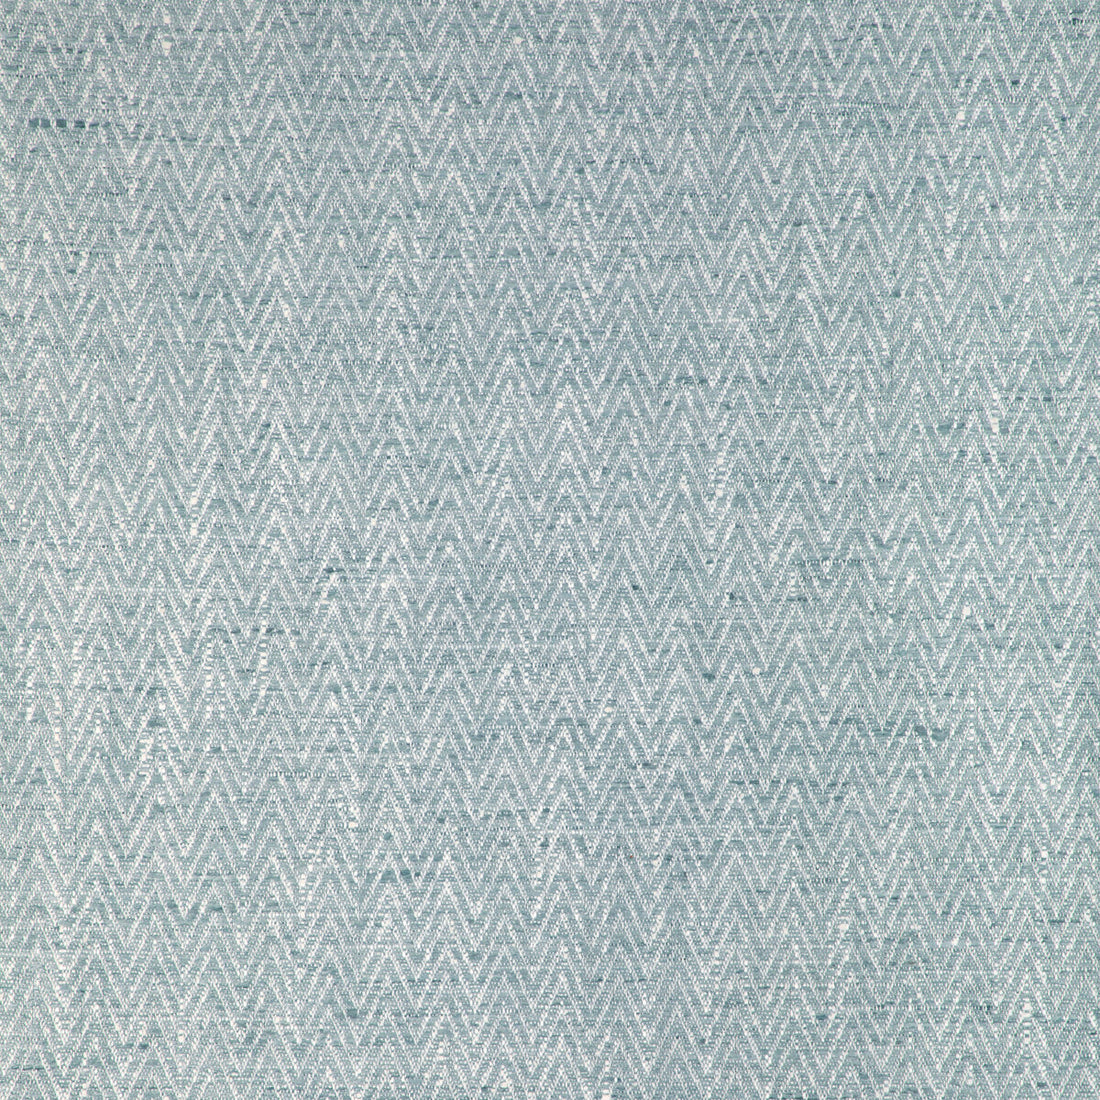 Kravet Smart fabric in 34092-15 color - pattern 34092.15.0 - by Kravet Smart